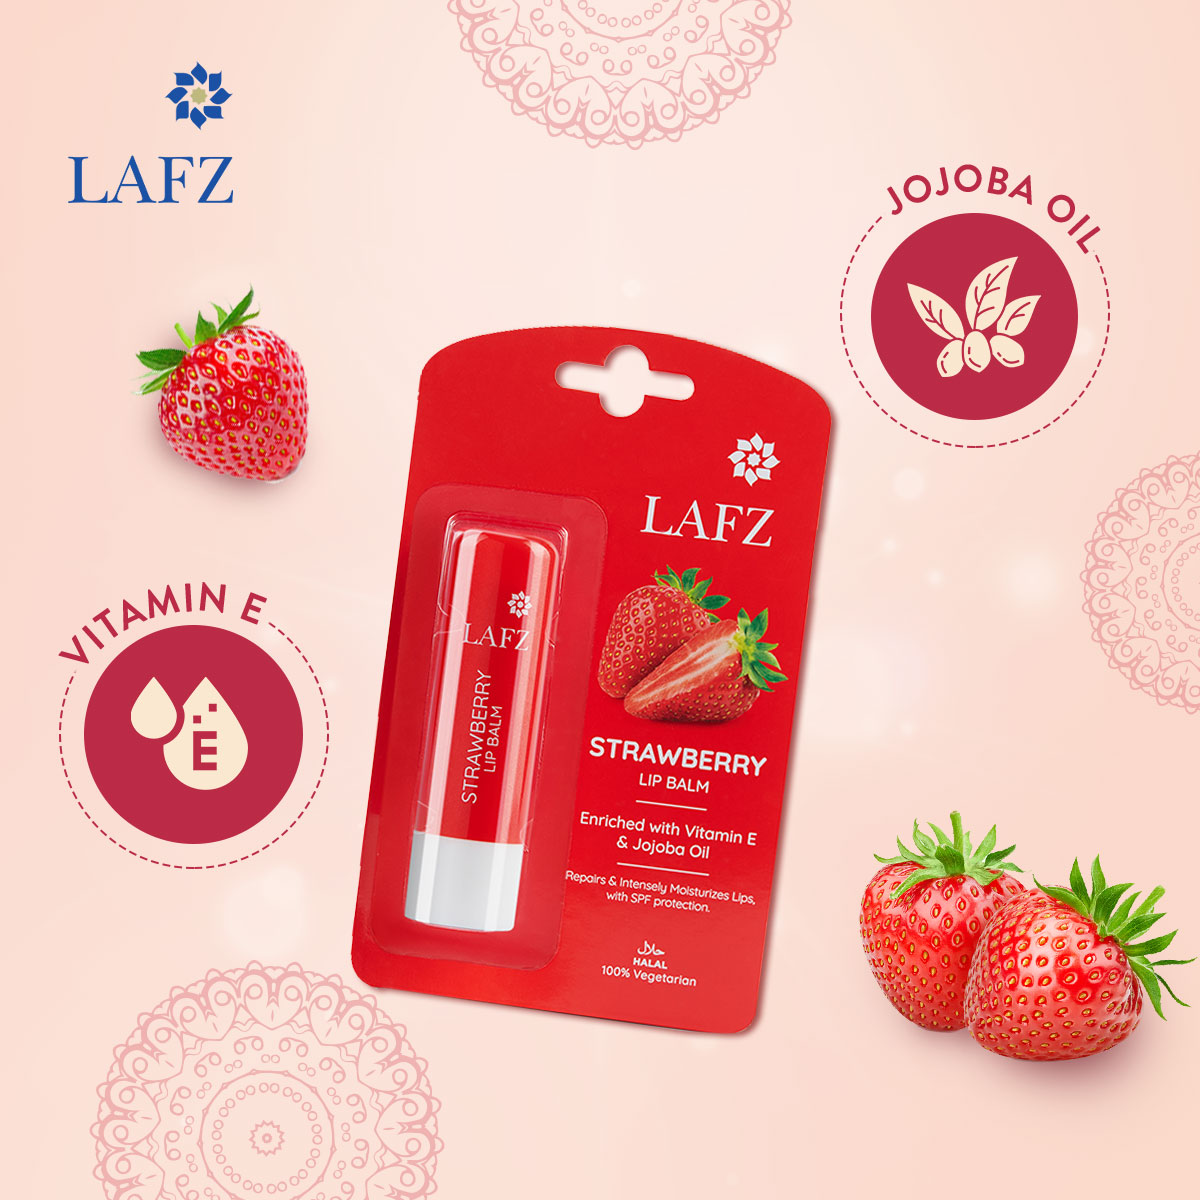 Lafz Strawberry Lip Balm 4.5 gm